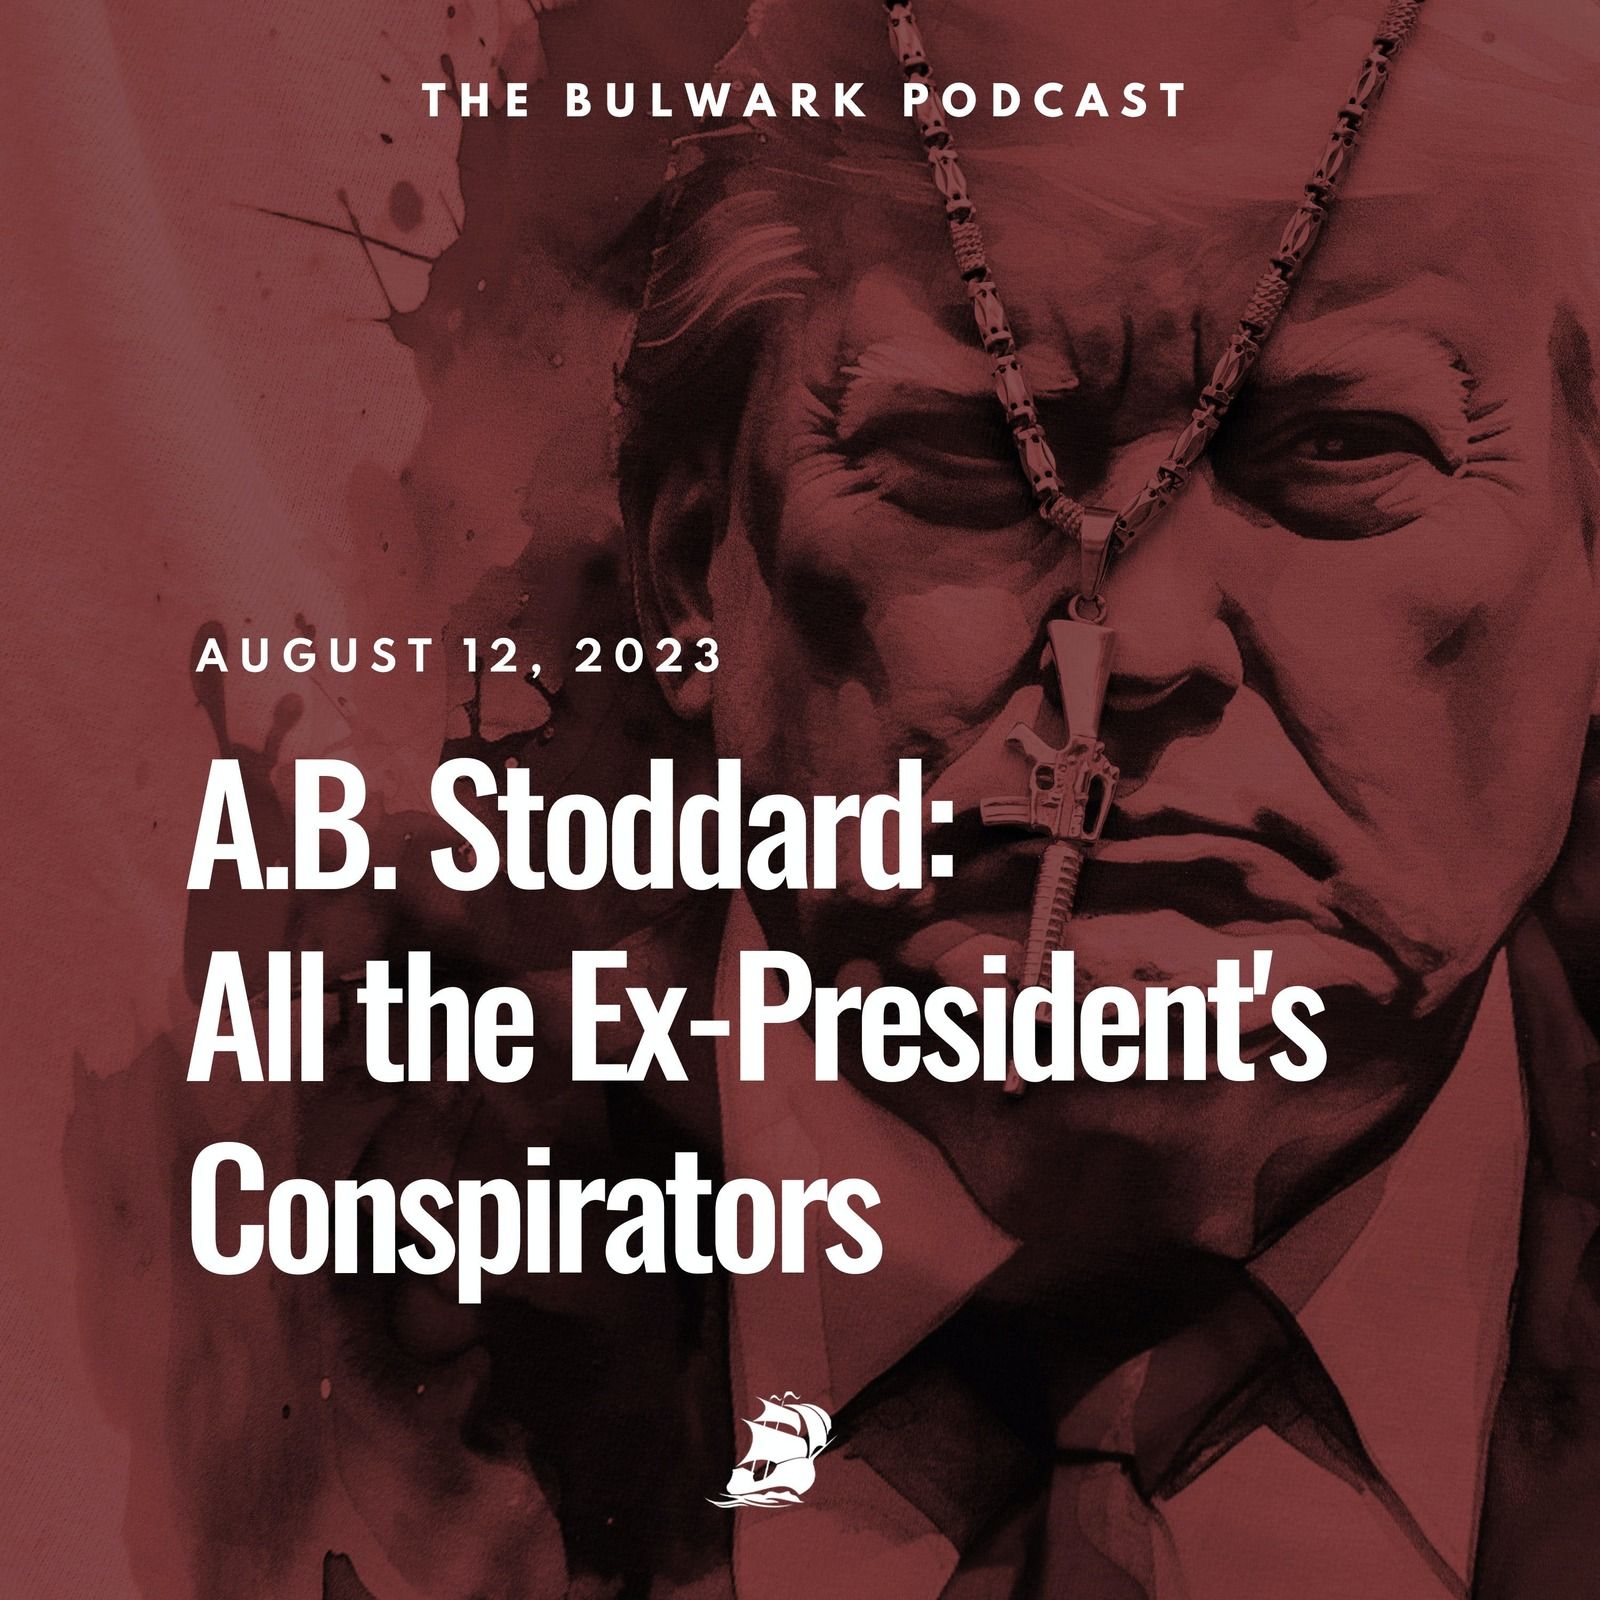 A.B. Stoddard: All the Ex-President's Conspirators